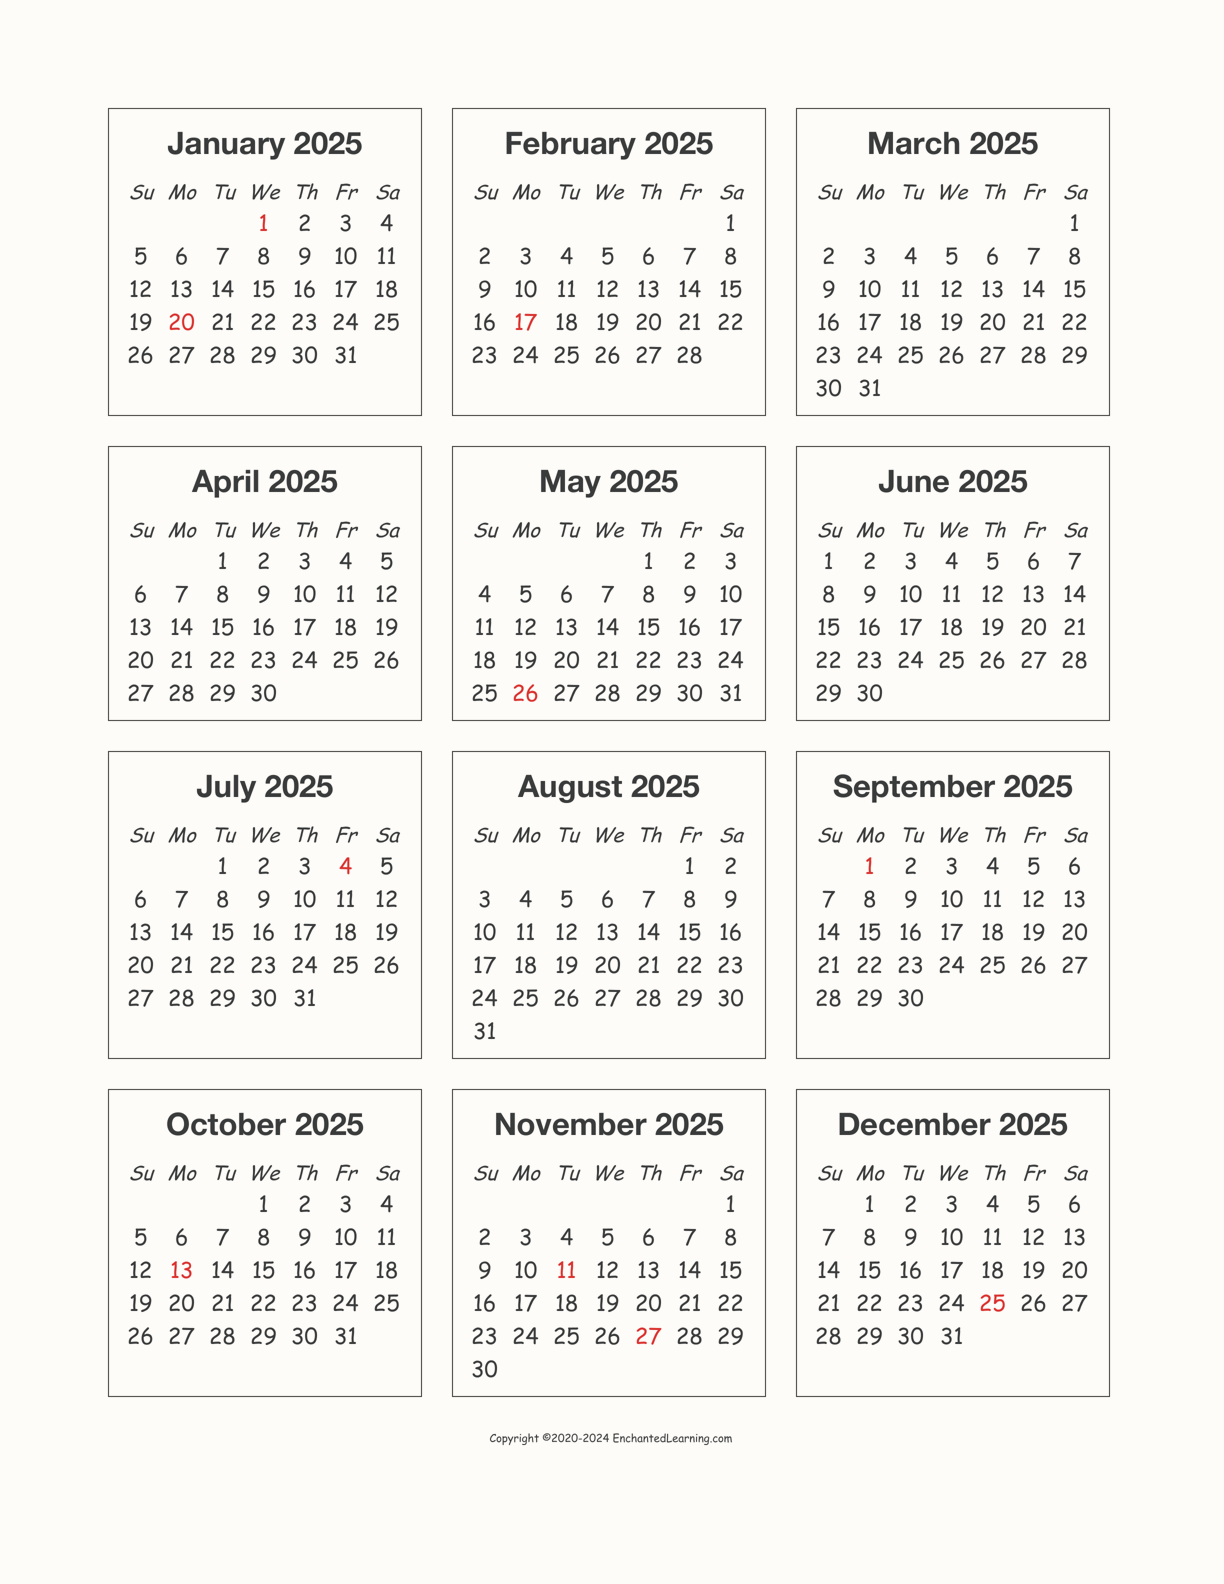 2025 OnePage Calendar Enchanted Learning